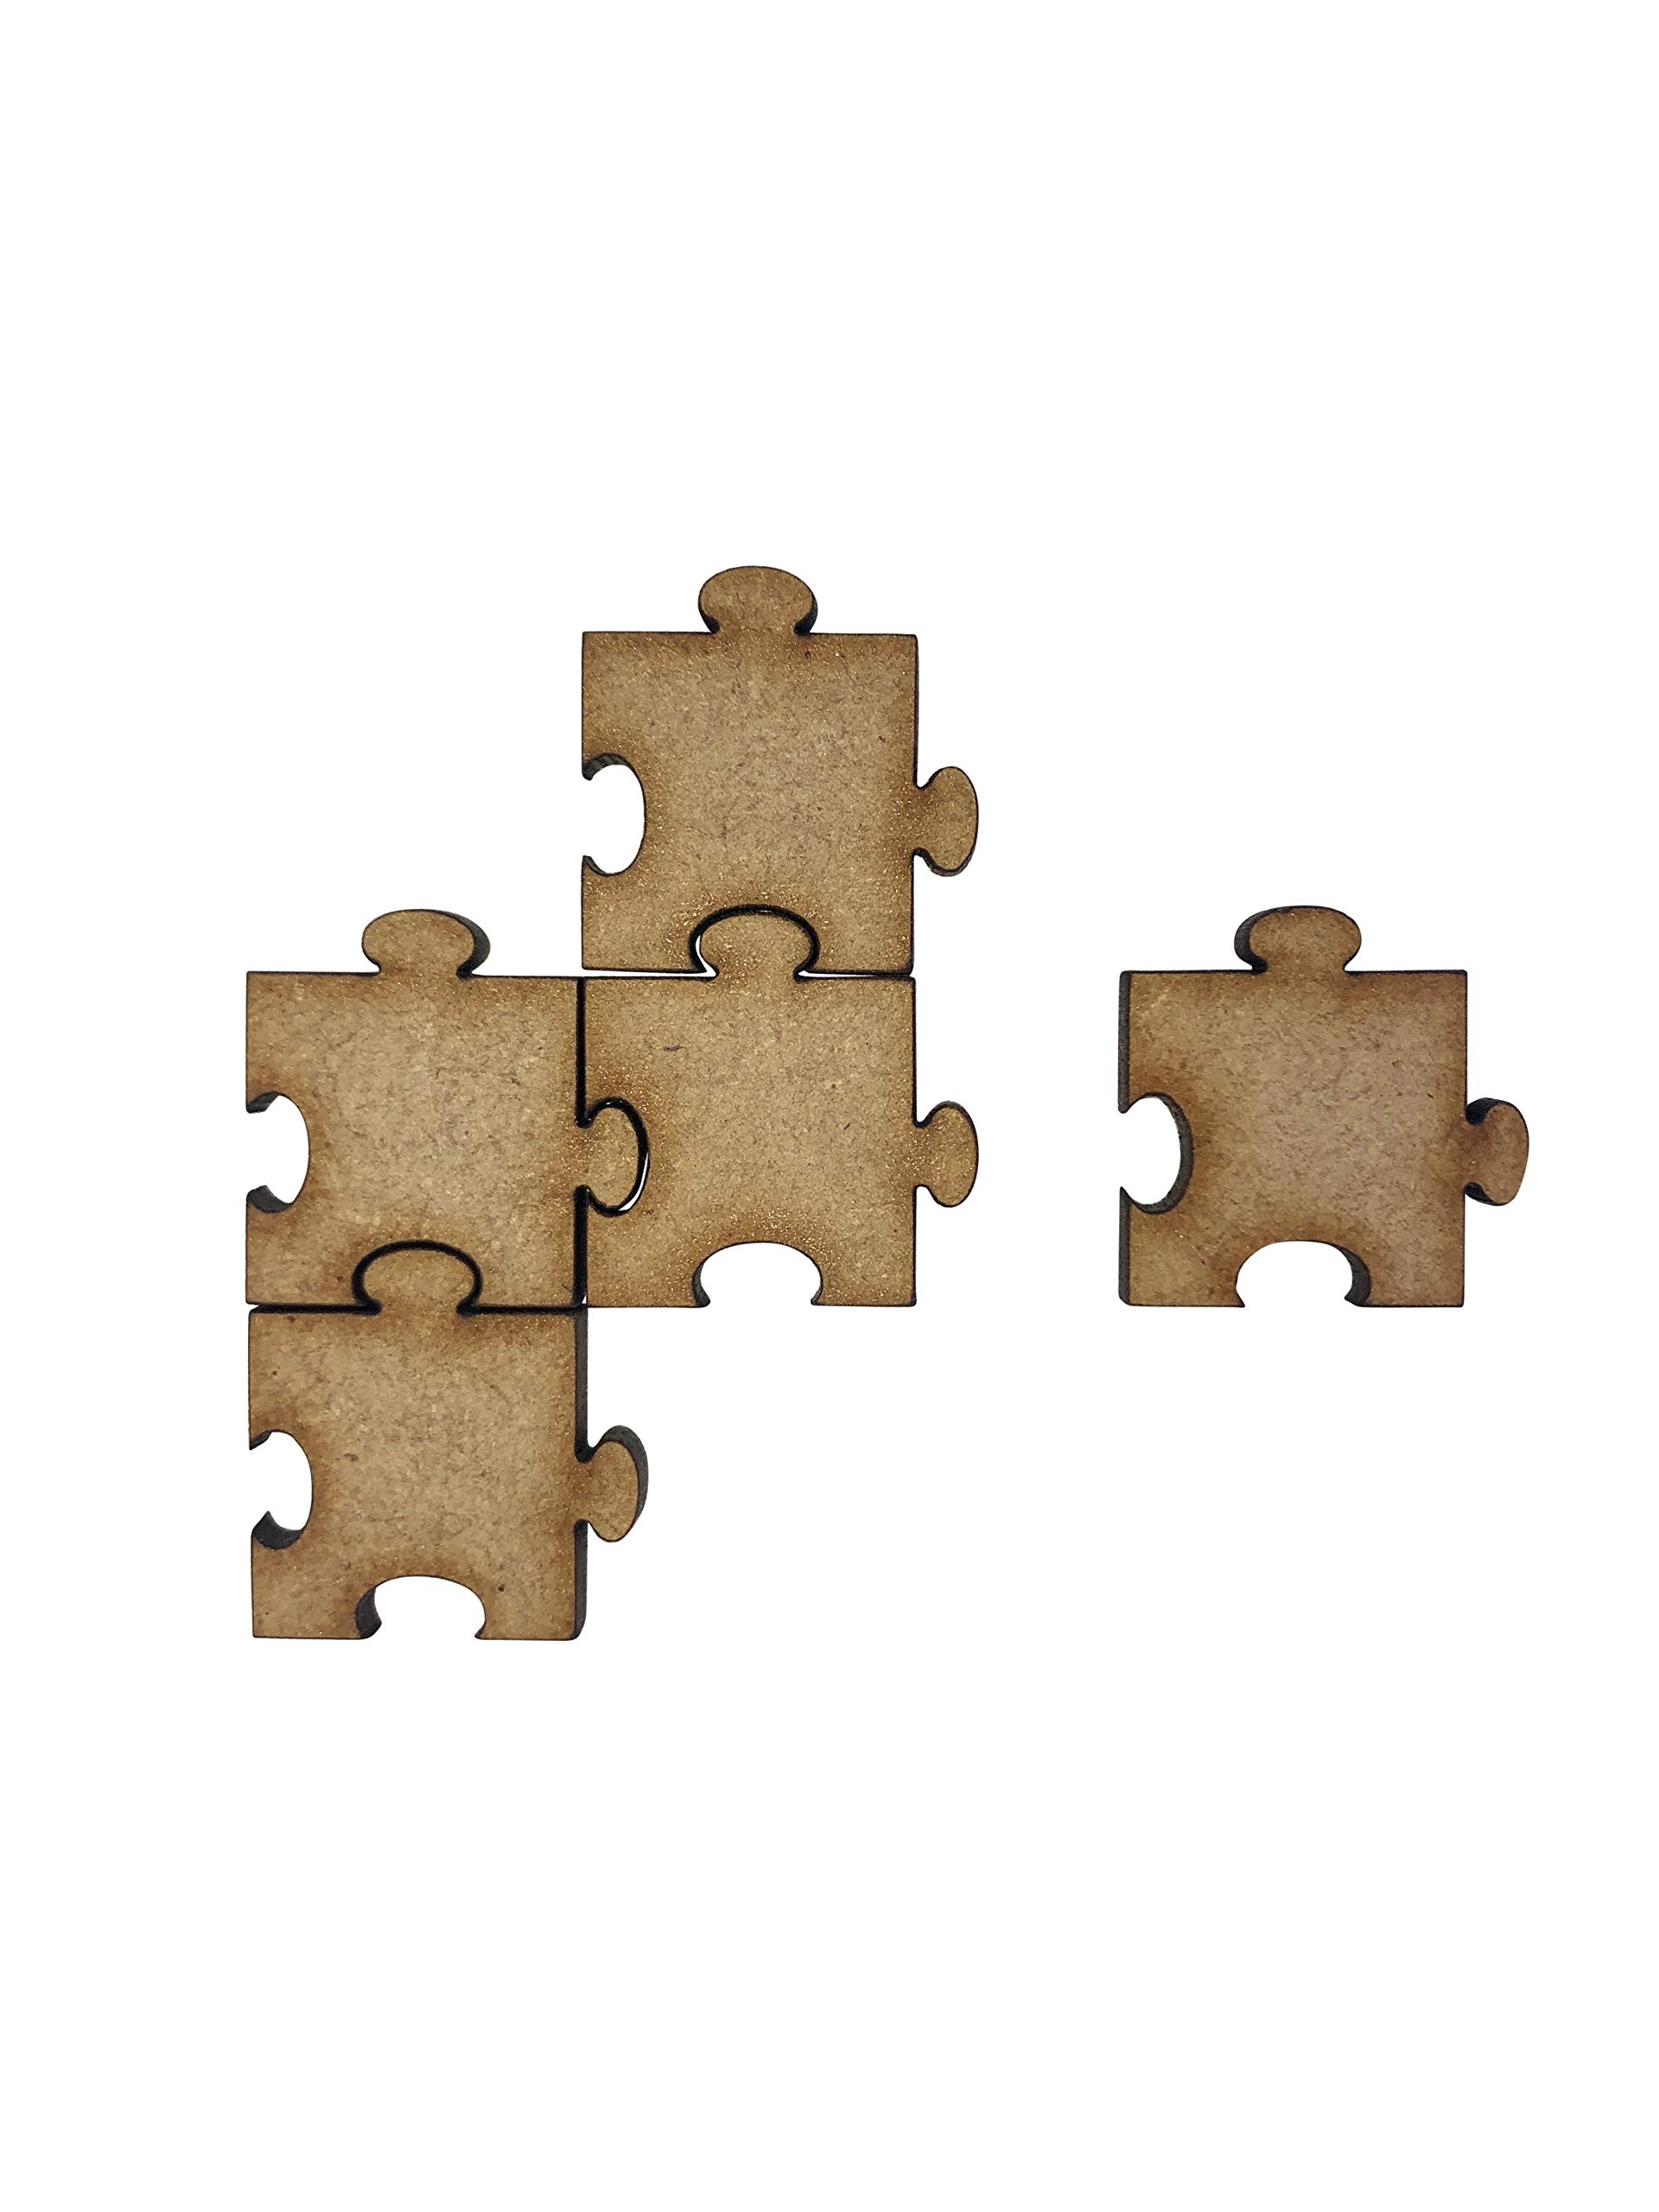 An empty puzzle piece